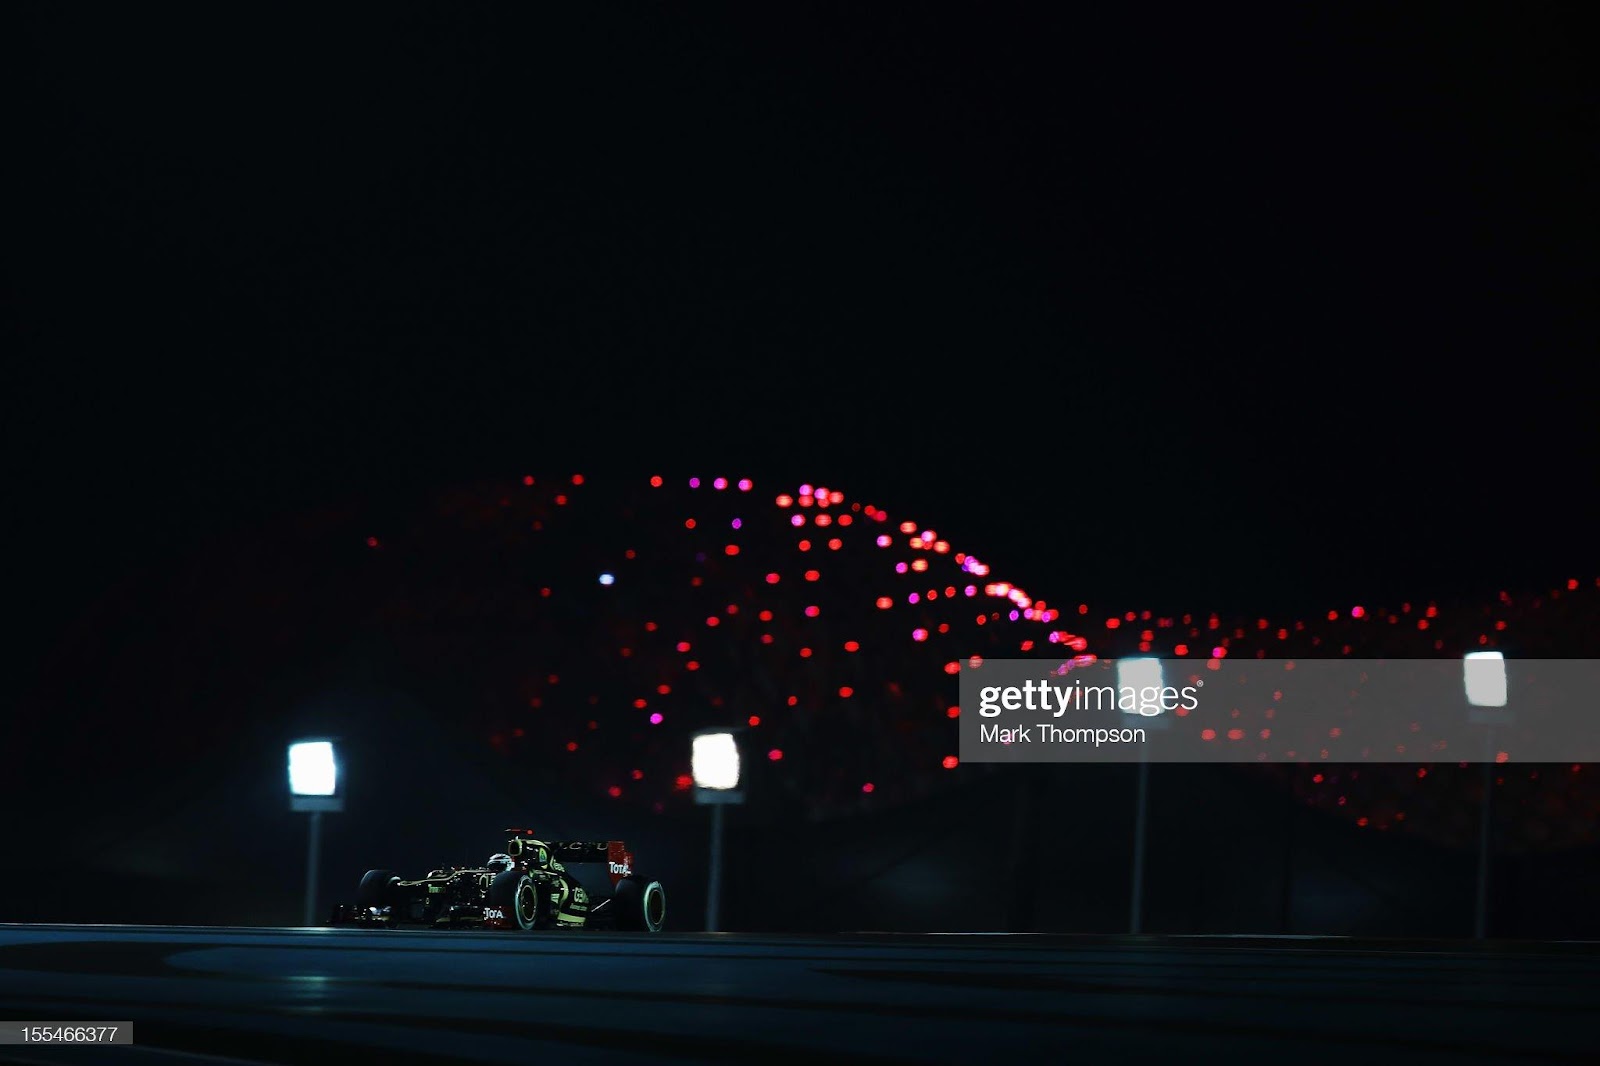 Kimi Raikkonen, Lotus, drives on his way to winning the Abu Dhabi F1 Grand Prix at the Yas Marina Circuit on November 4, 2012 in Abu Dhabi, United Arab Emirates.